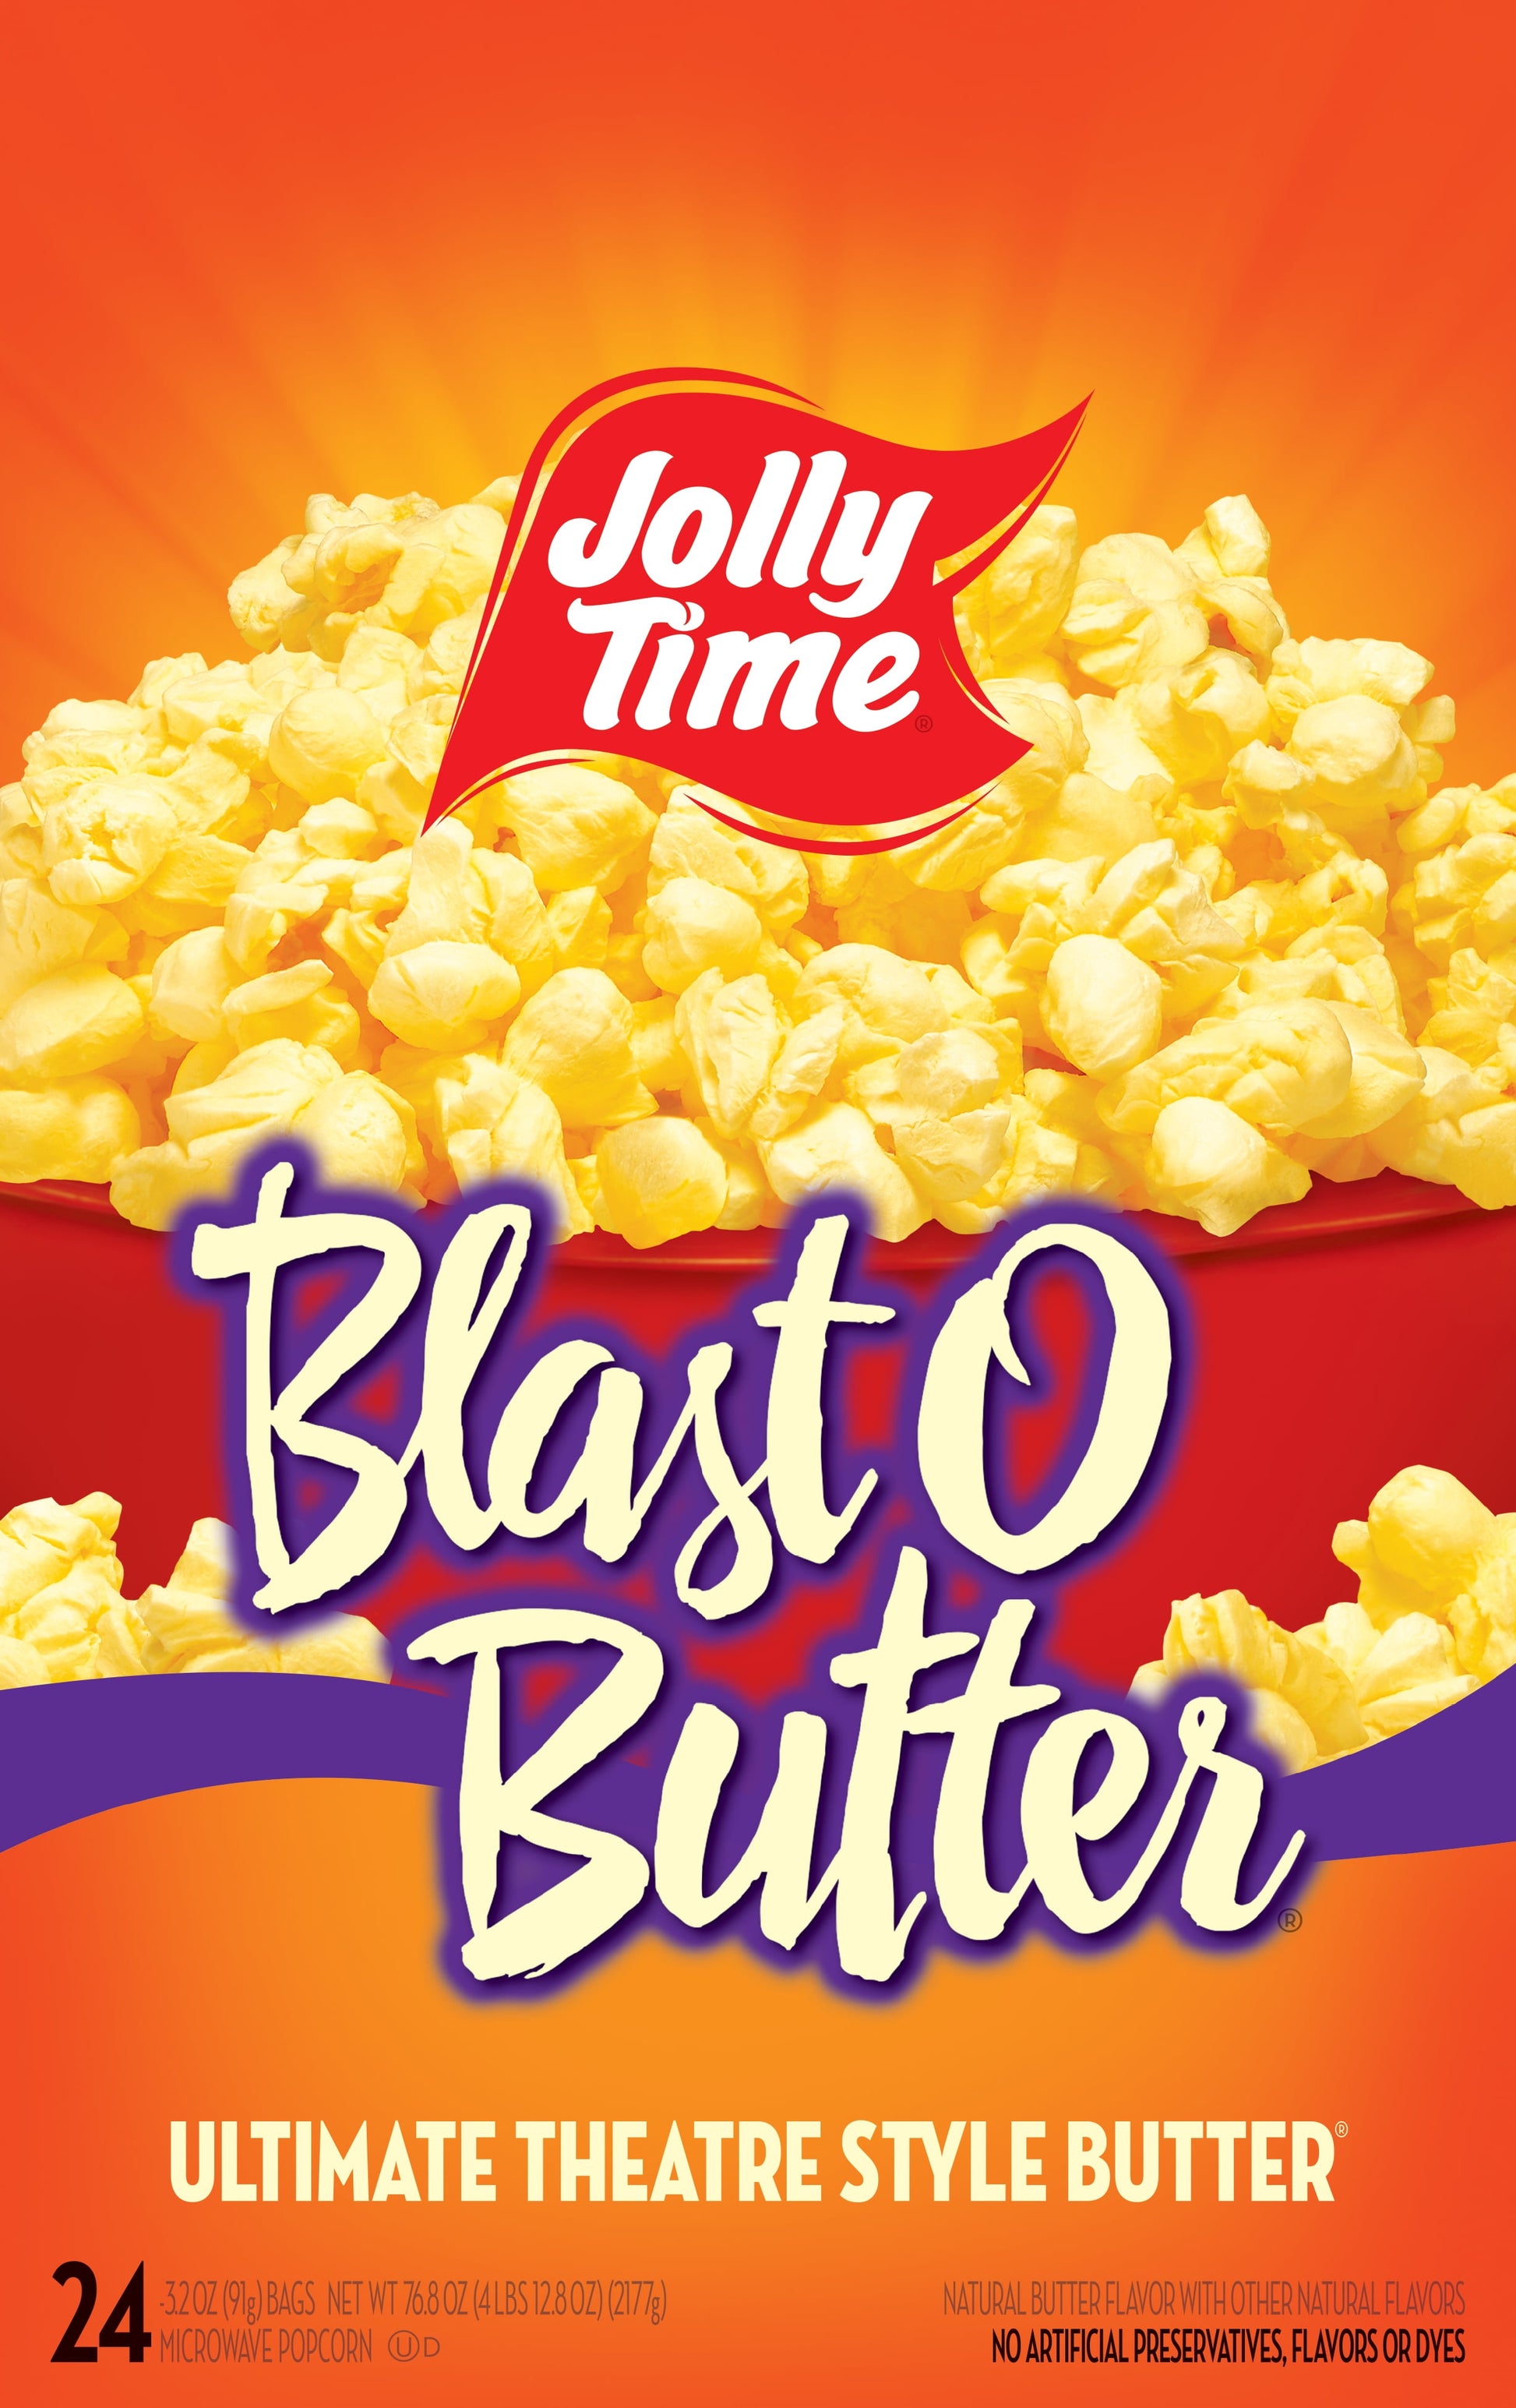 Blast O Butter Microwave Popcorn, 24 Ct (3.2 Oz. Bags) Gluten-Free